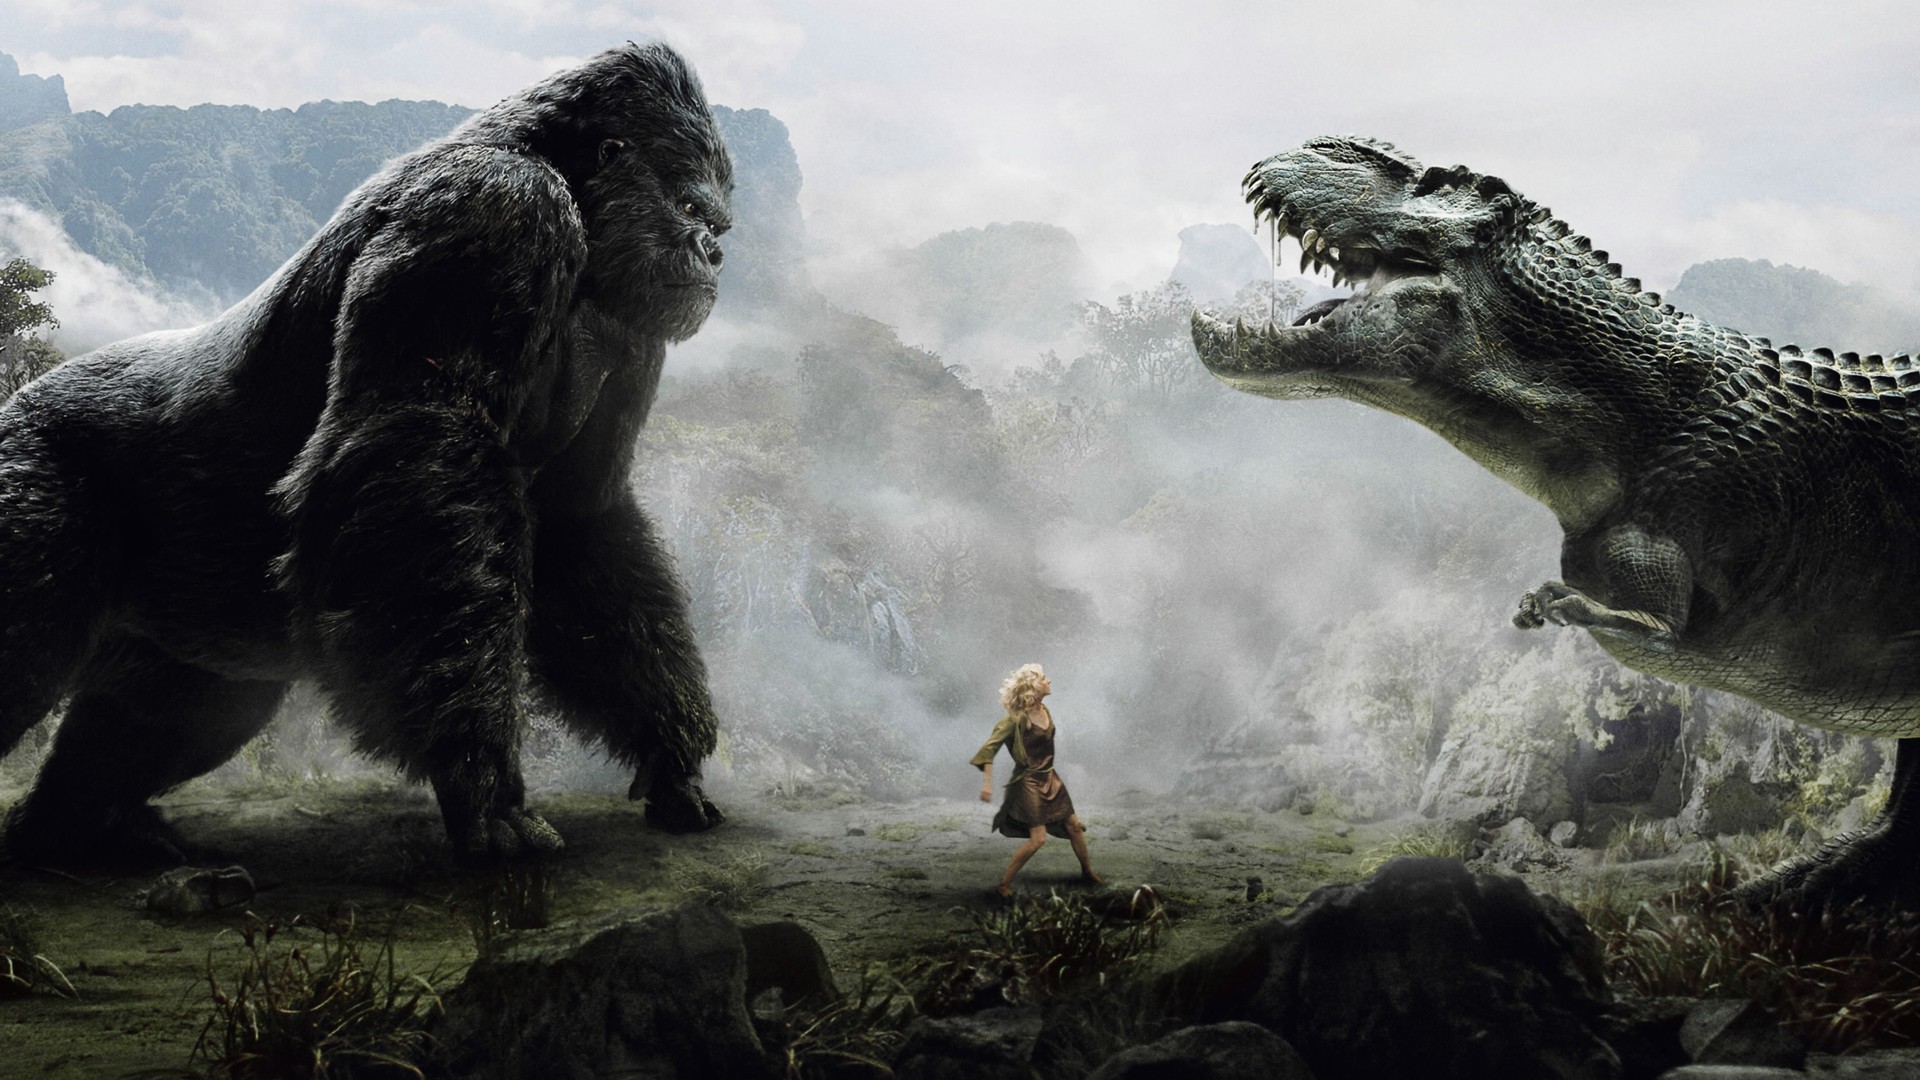 General 1920x1080 movies King Kong dinosaurs creature 2005 (Year) digital art